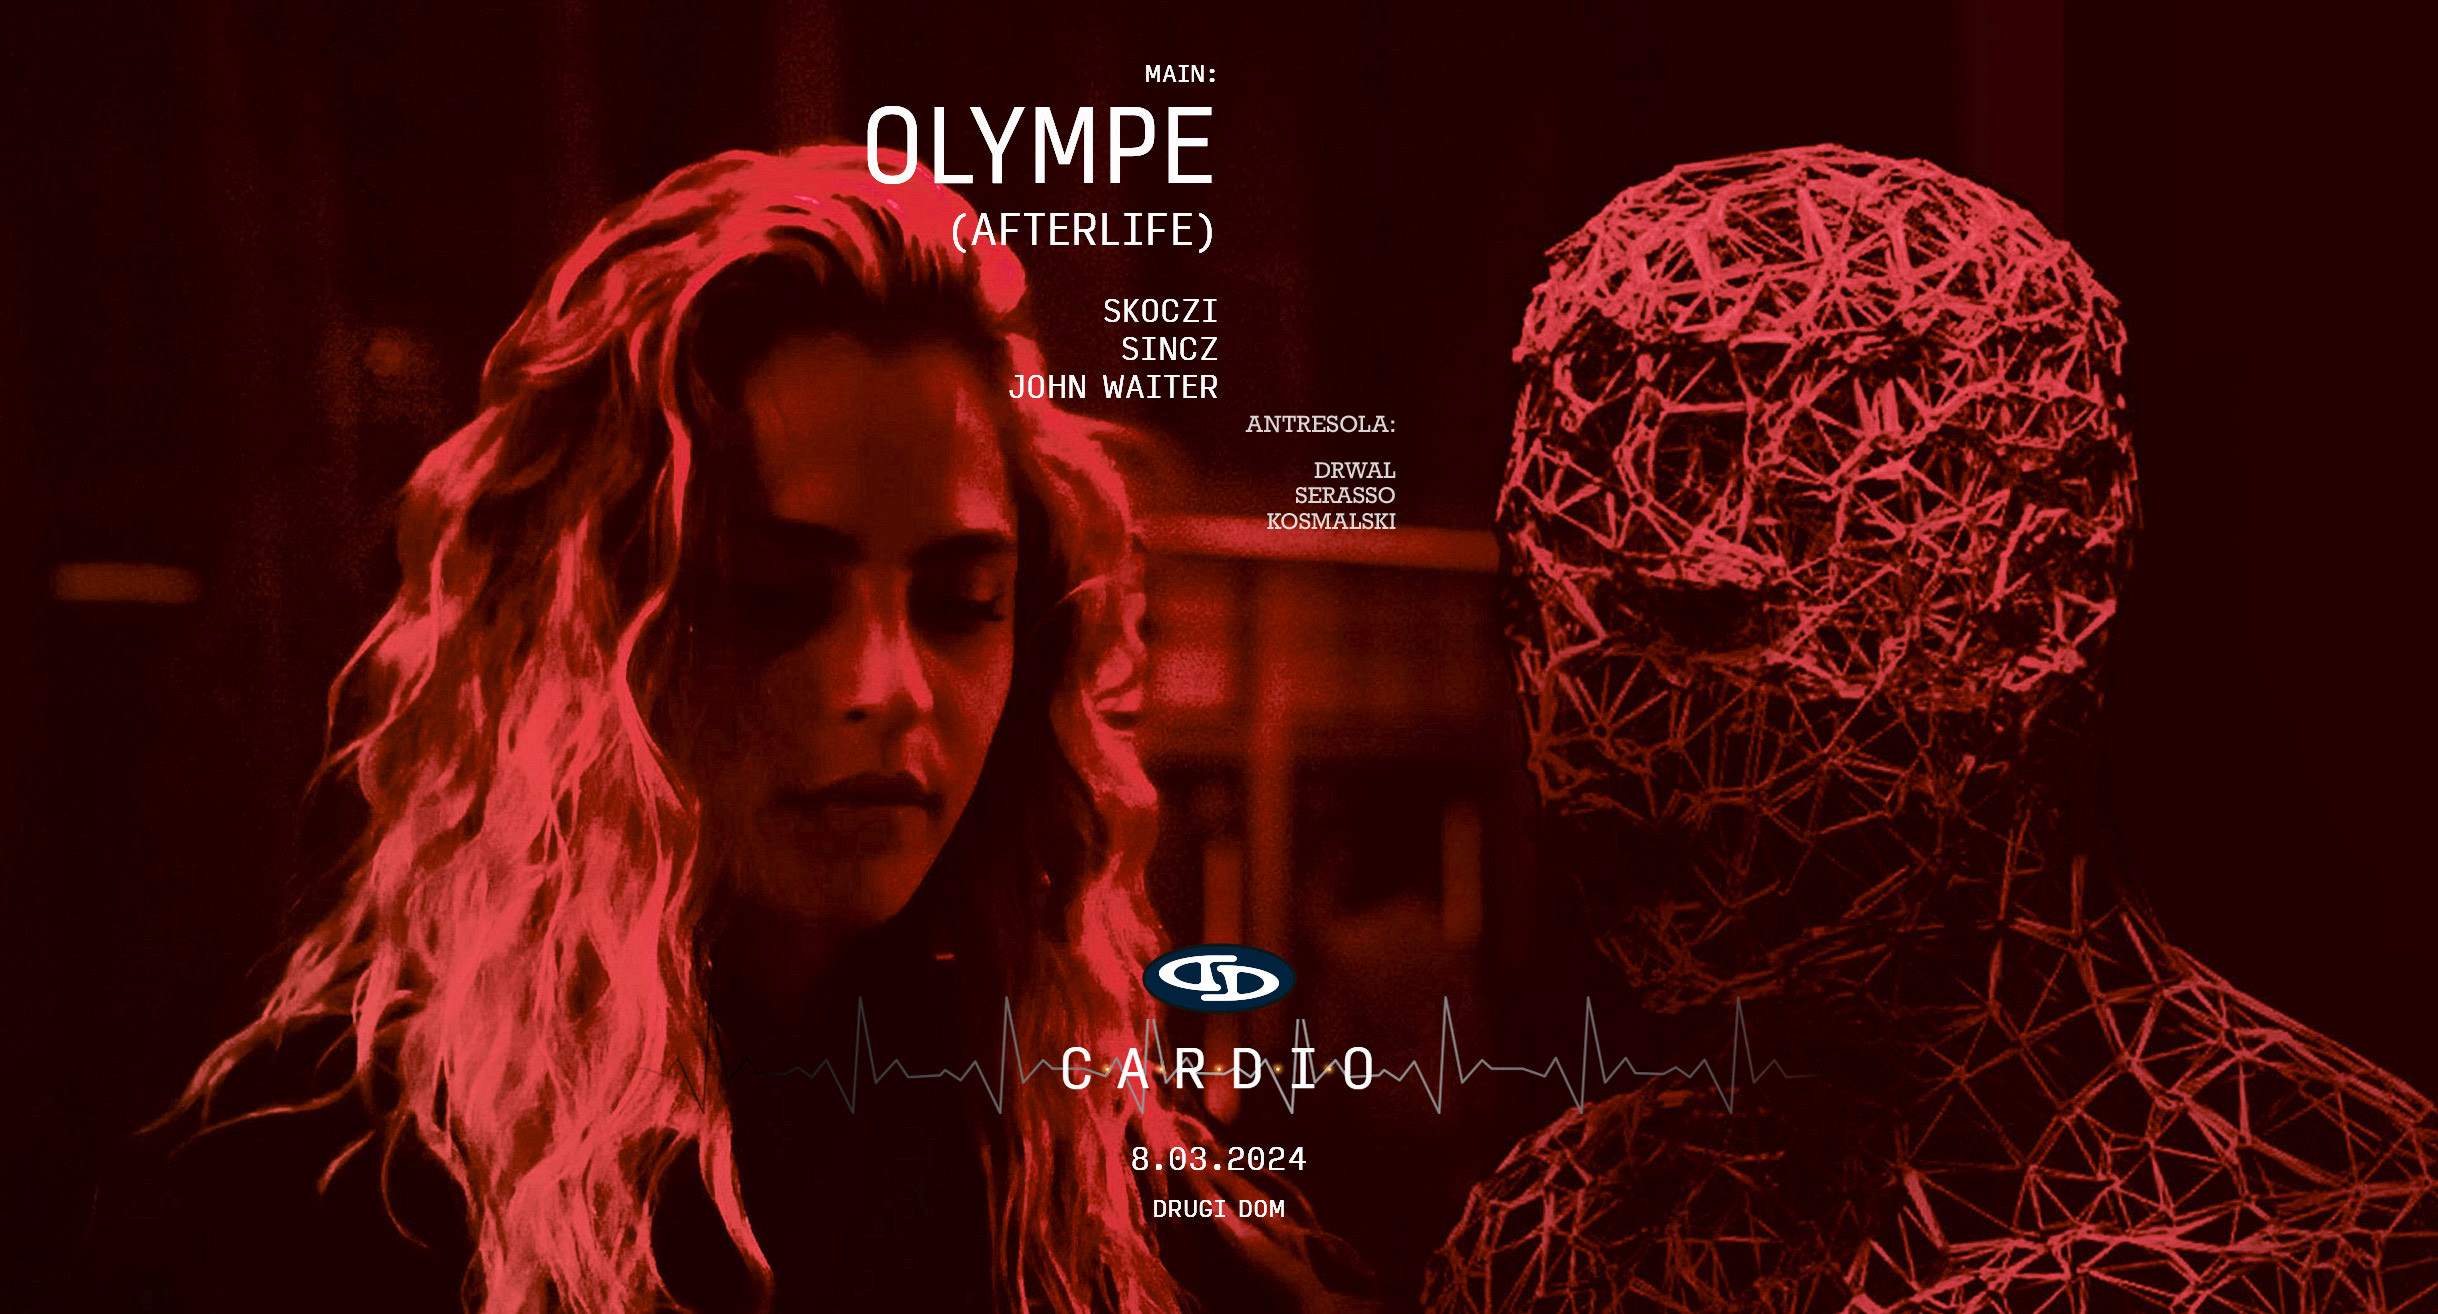 CARDIO - Olympe (Afterlife) - Drugi DOM - フライヤー裏